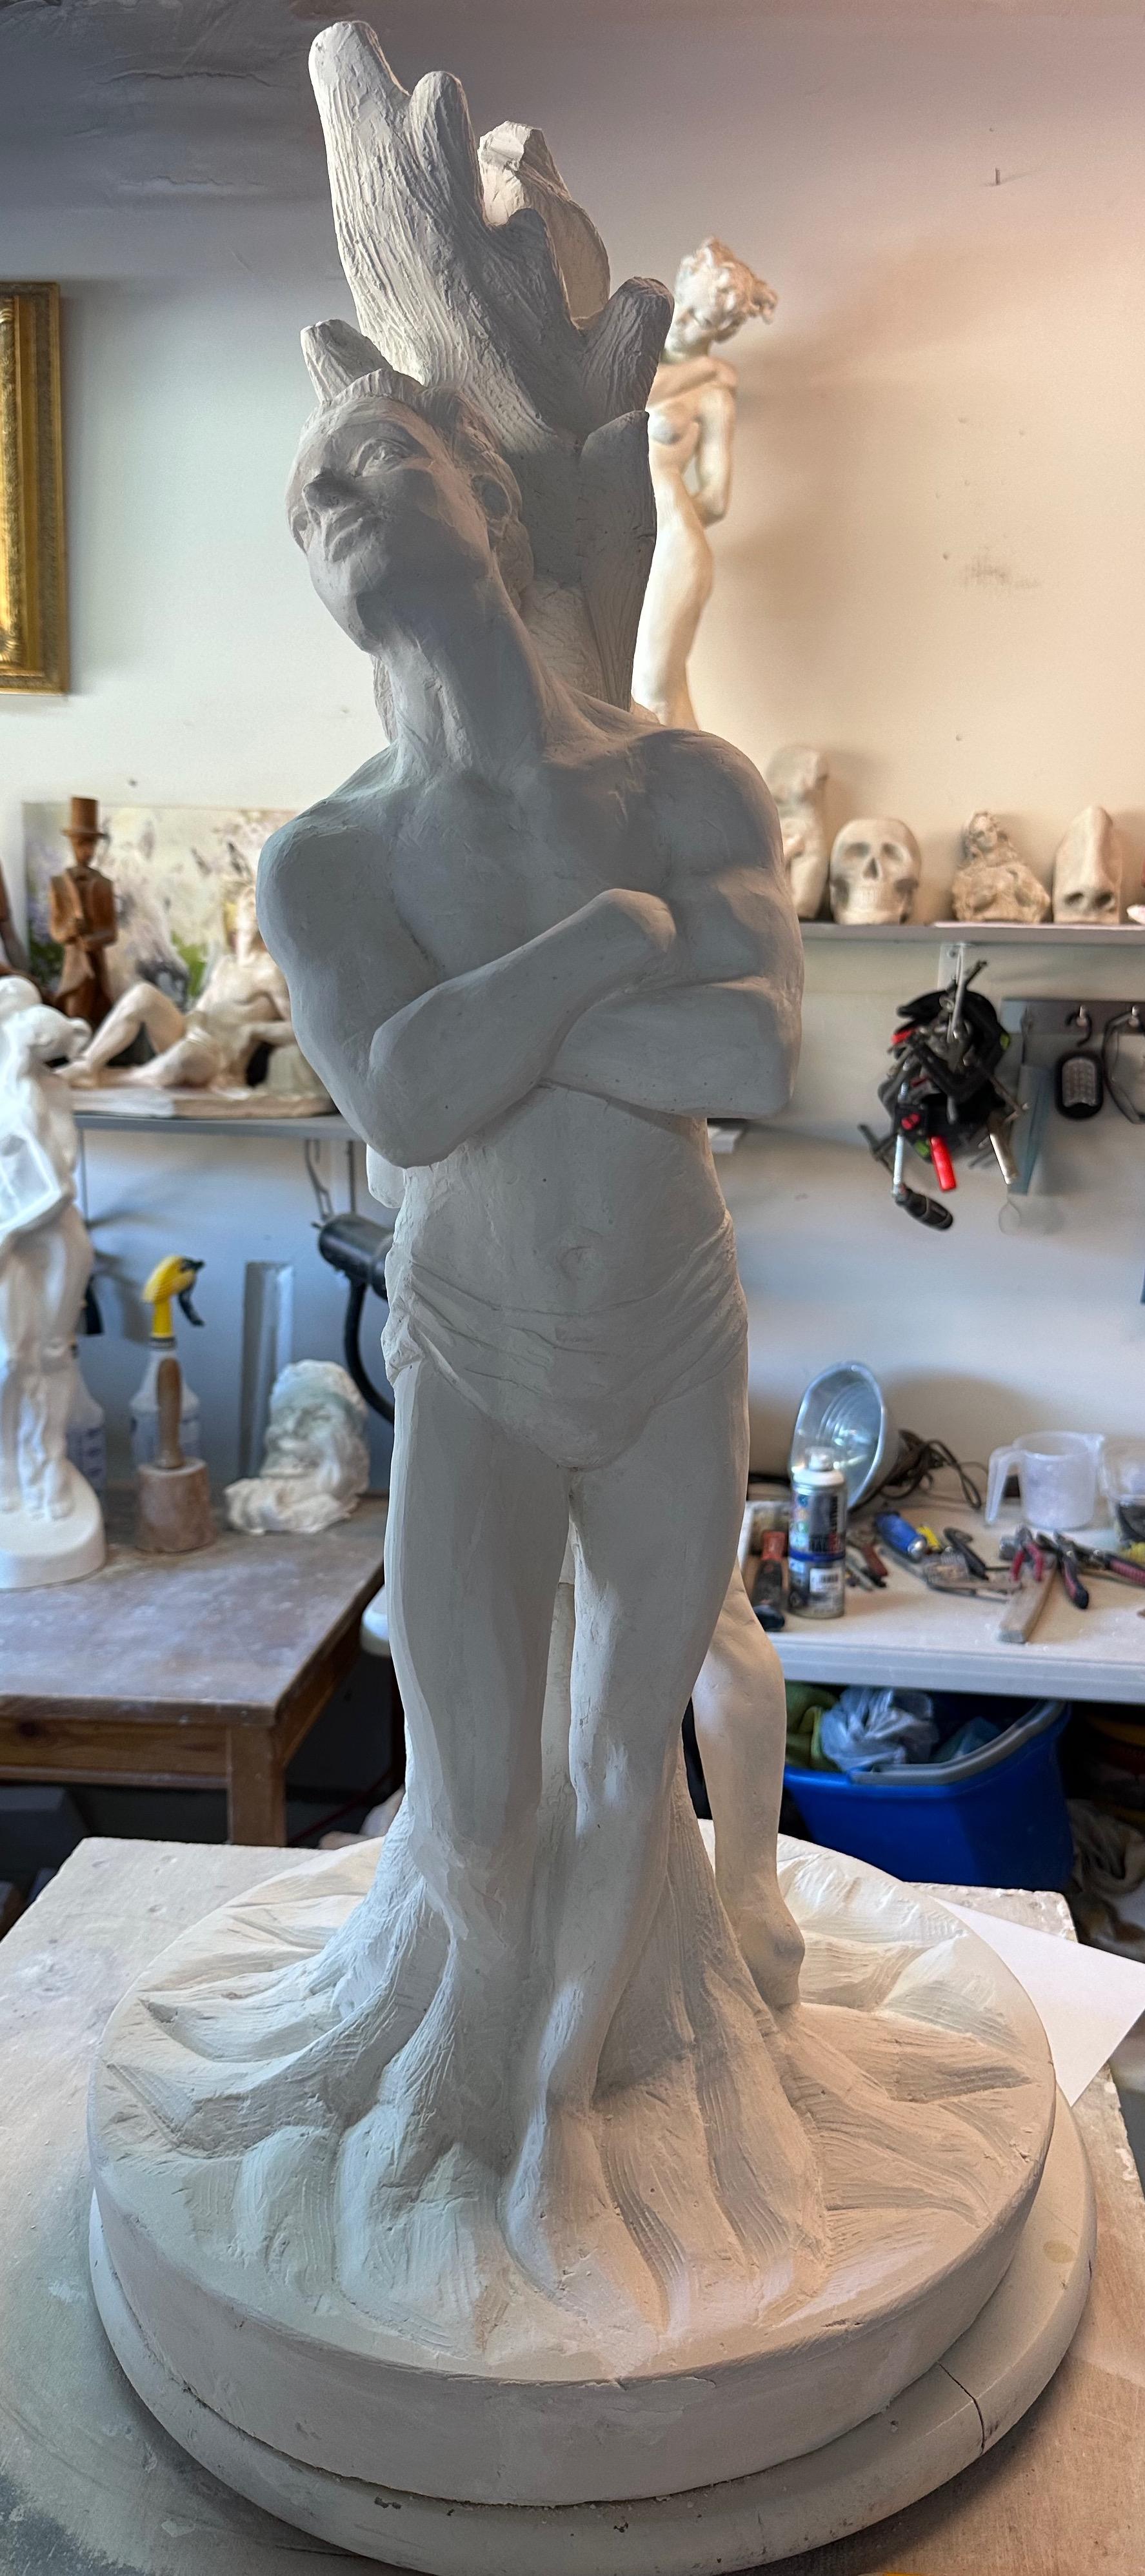 Adam and Eva, Sculpture, Hydro Stone Handmade by Garo, One of a Kind - Gray Figurative Sculpture by Karapet Balakeseryan  (Garo)